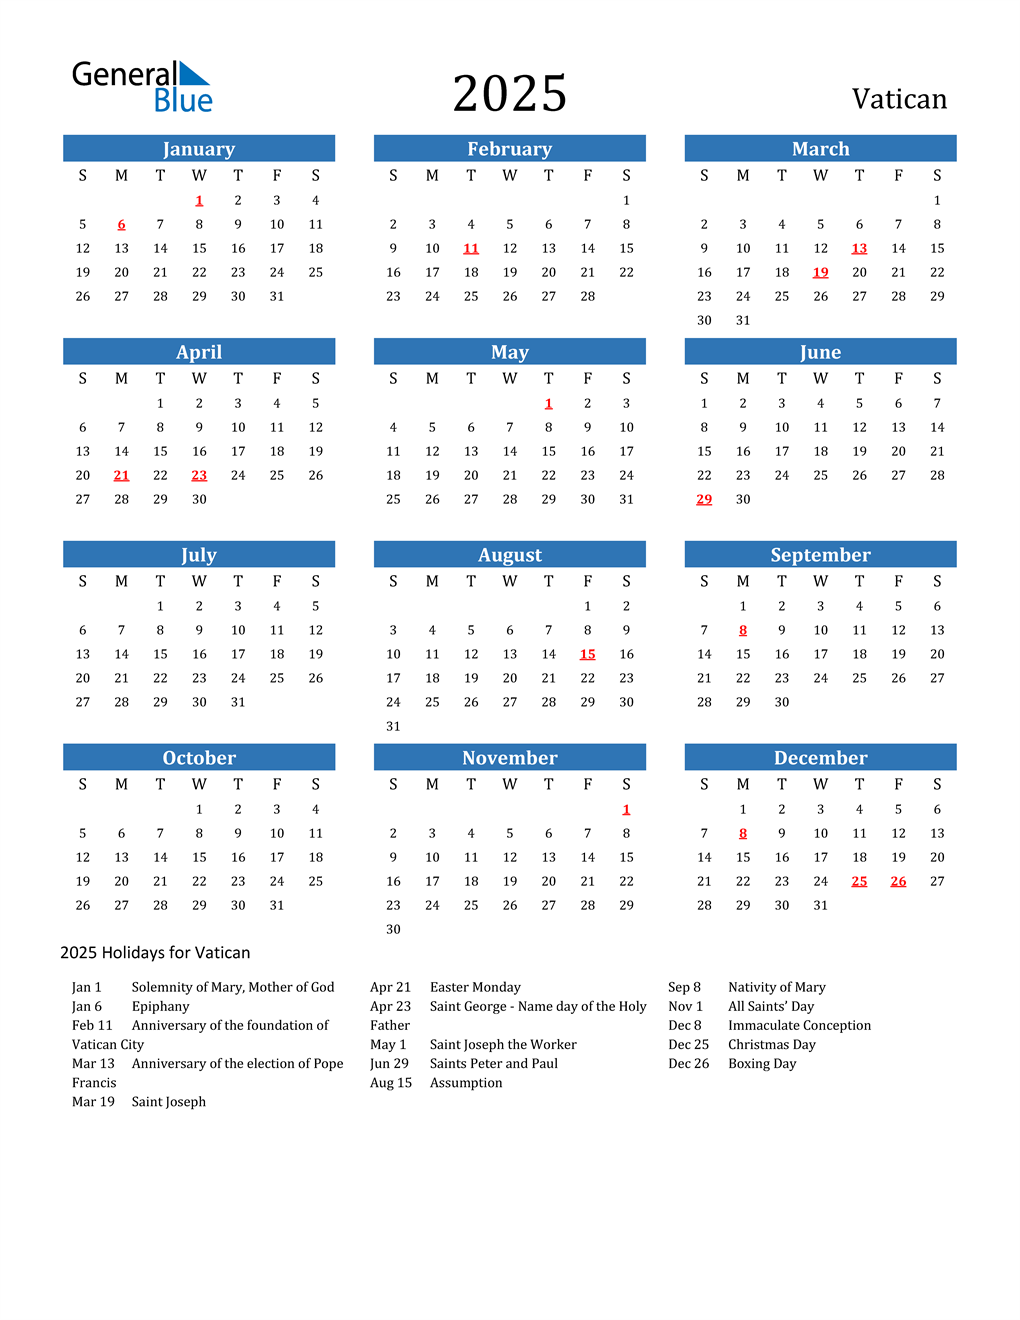 2025-vatican-calendar-with-holidays